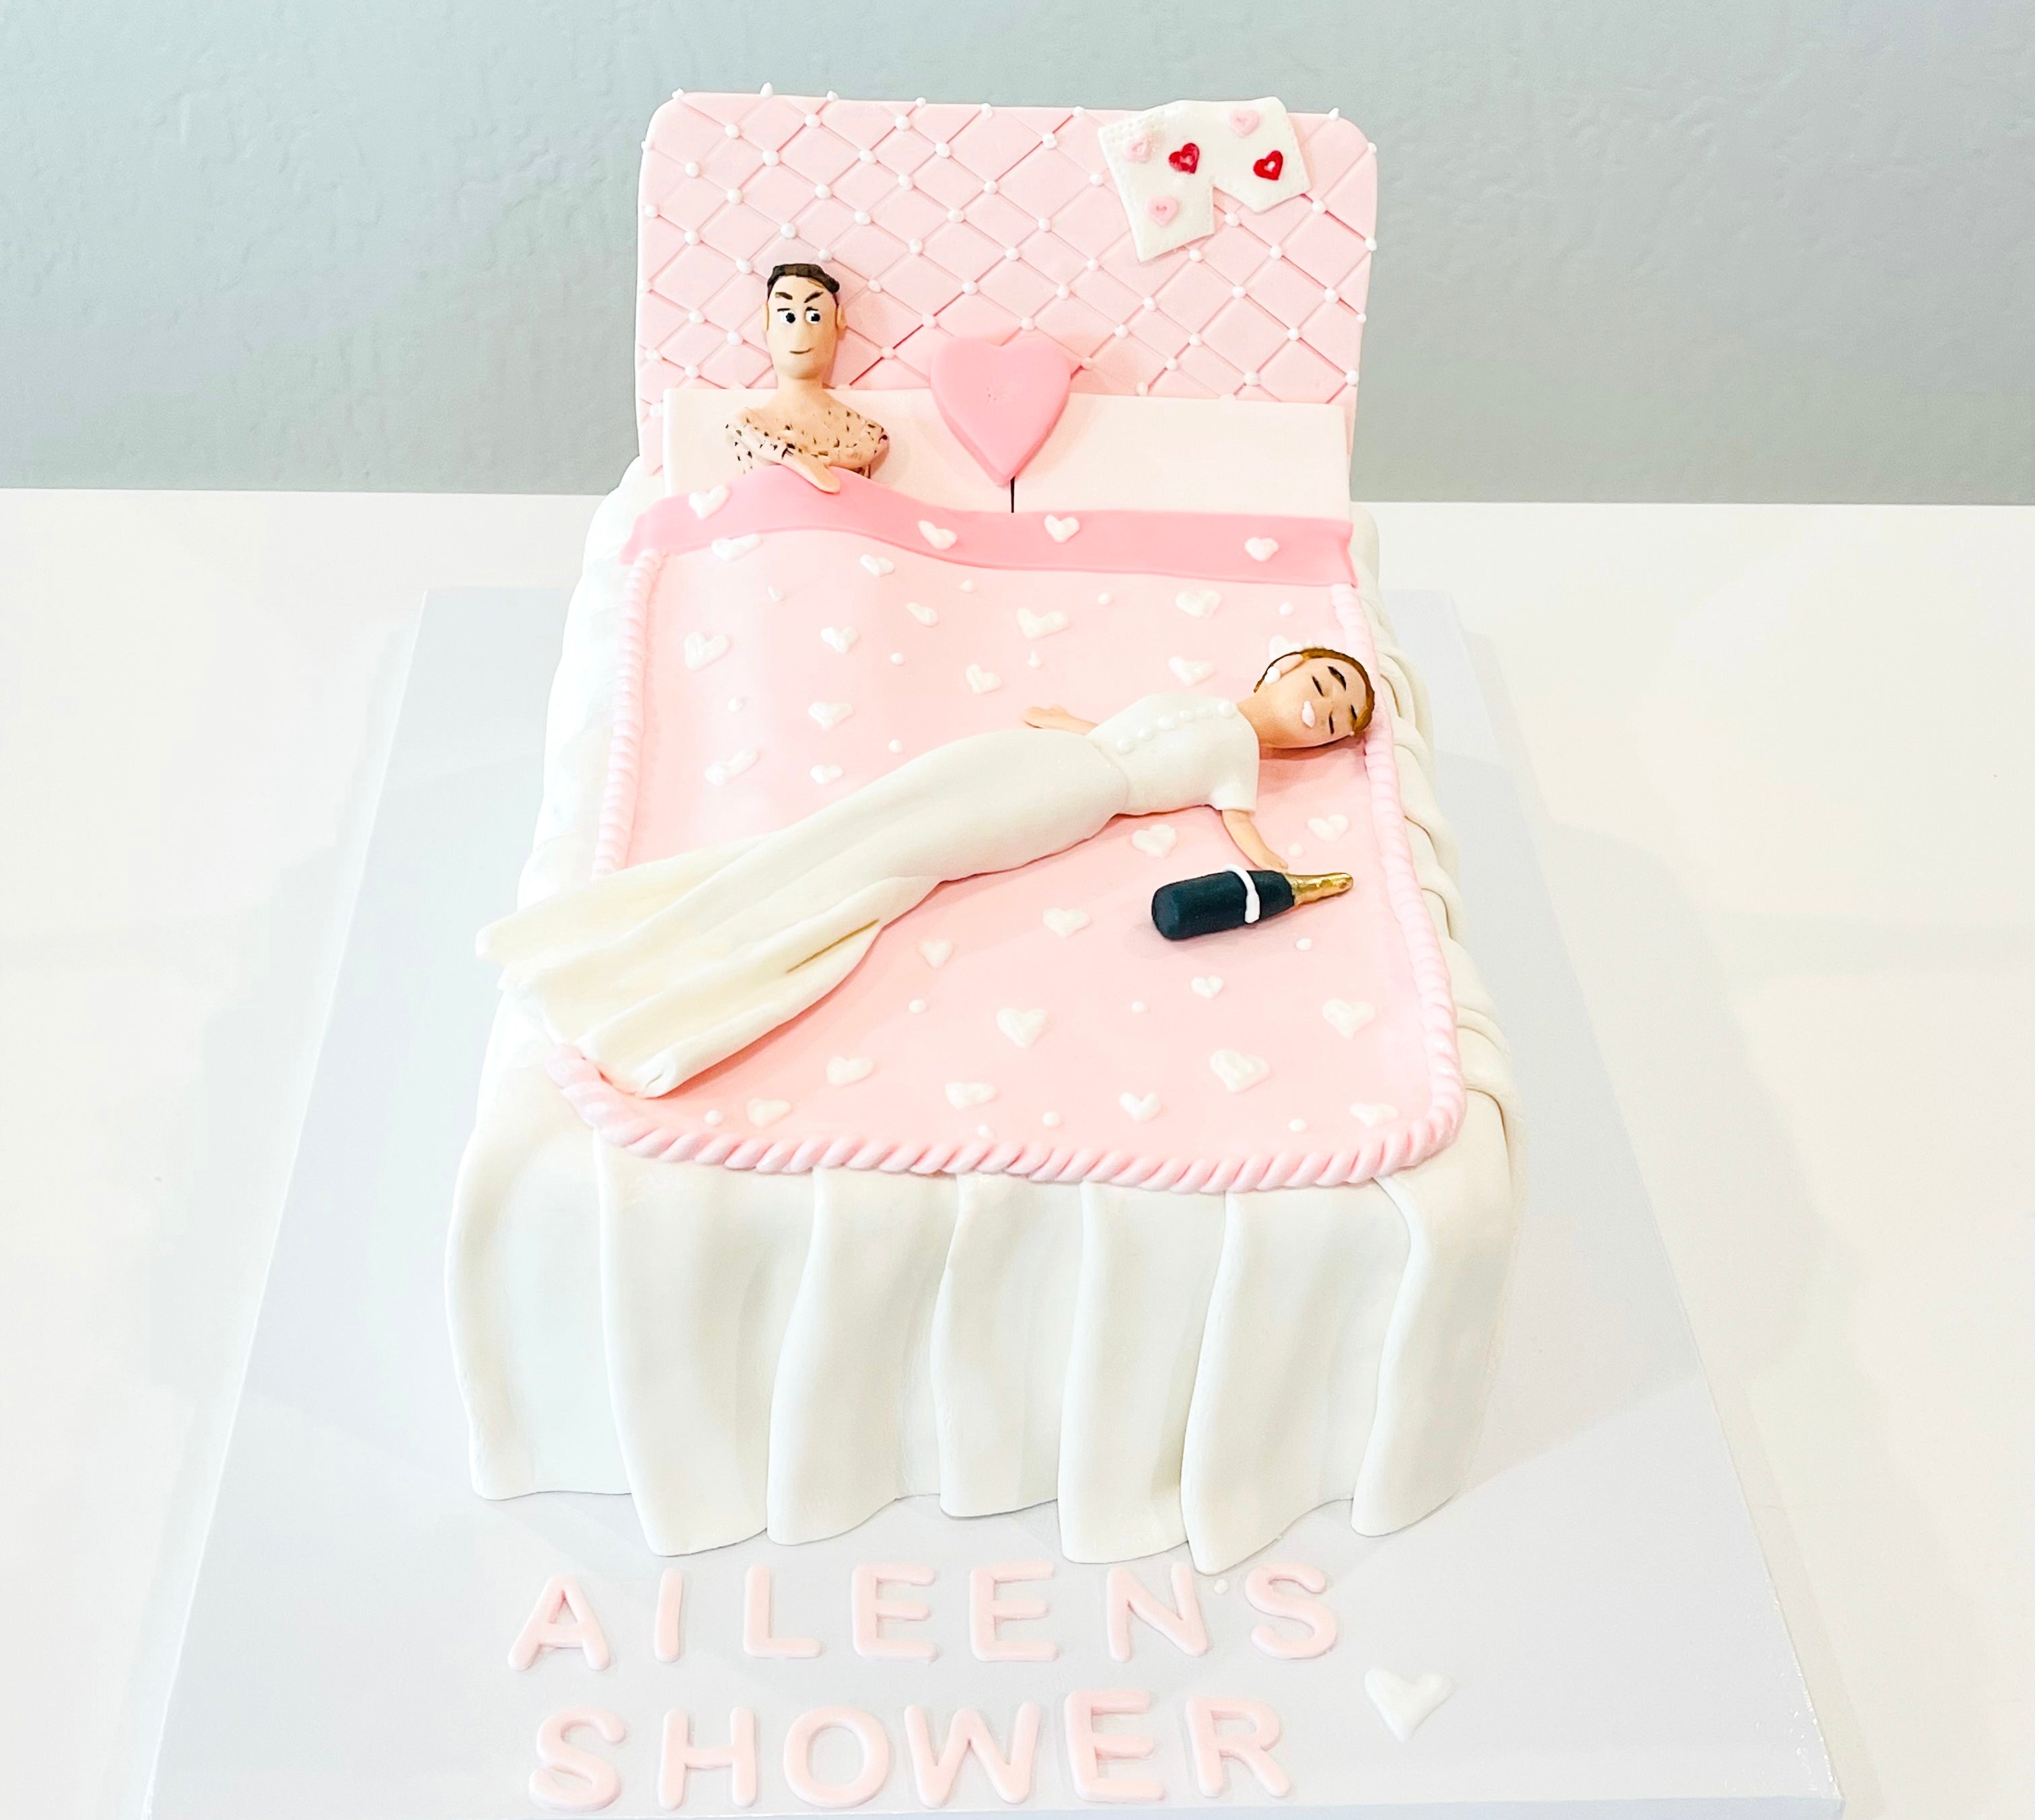 Top 10 unique cake ideas for bachelorette party - YouTube